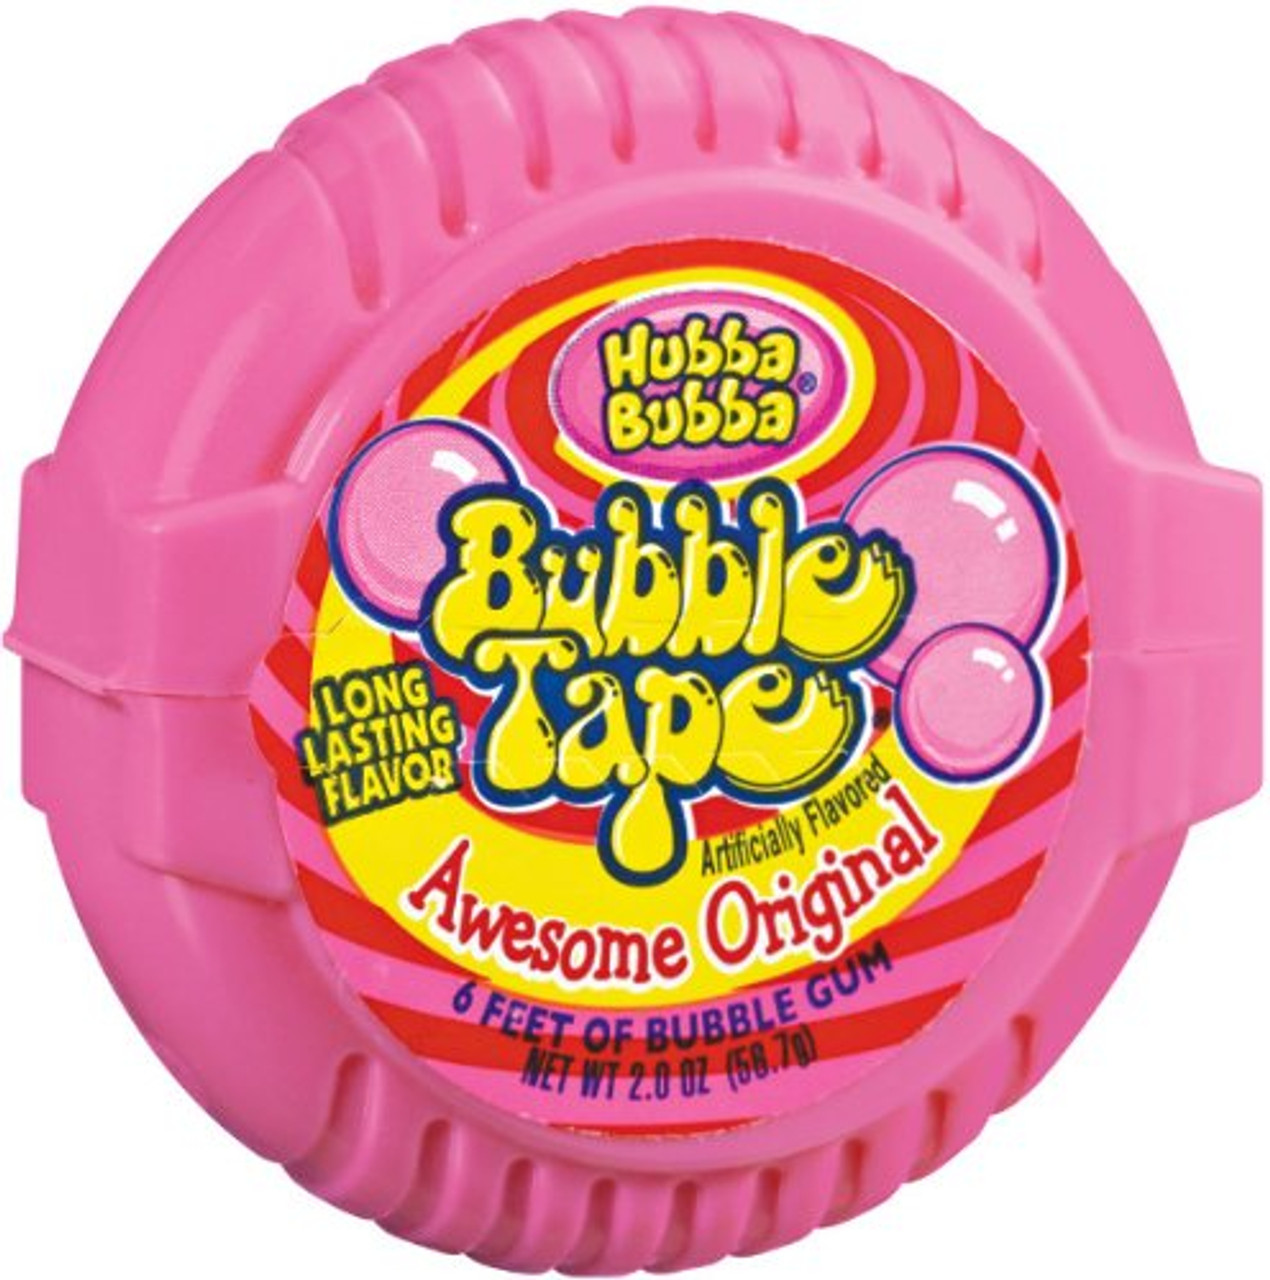 Hubba Bubba Bubble Gum, Bubble Tape, Awesome Original, Sour Blue